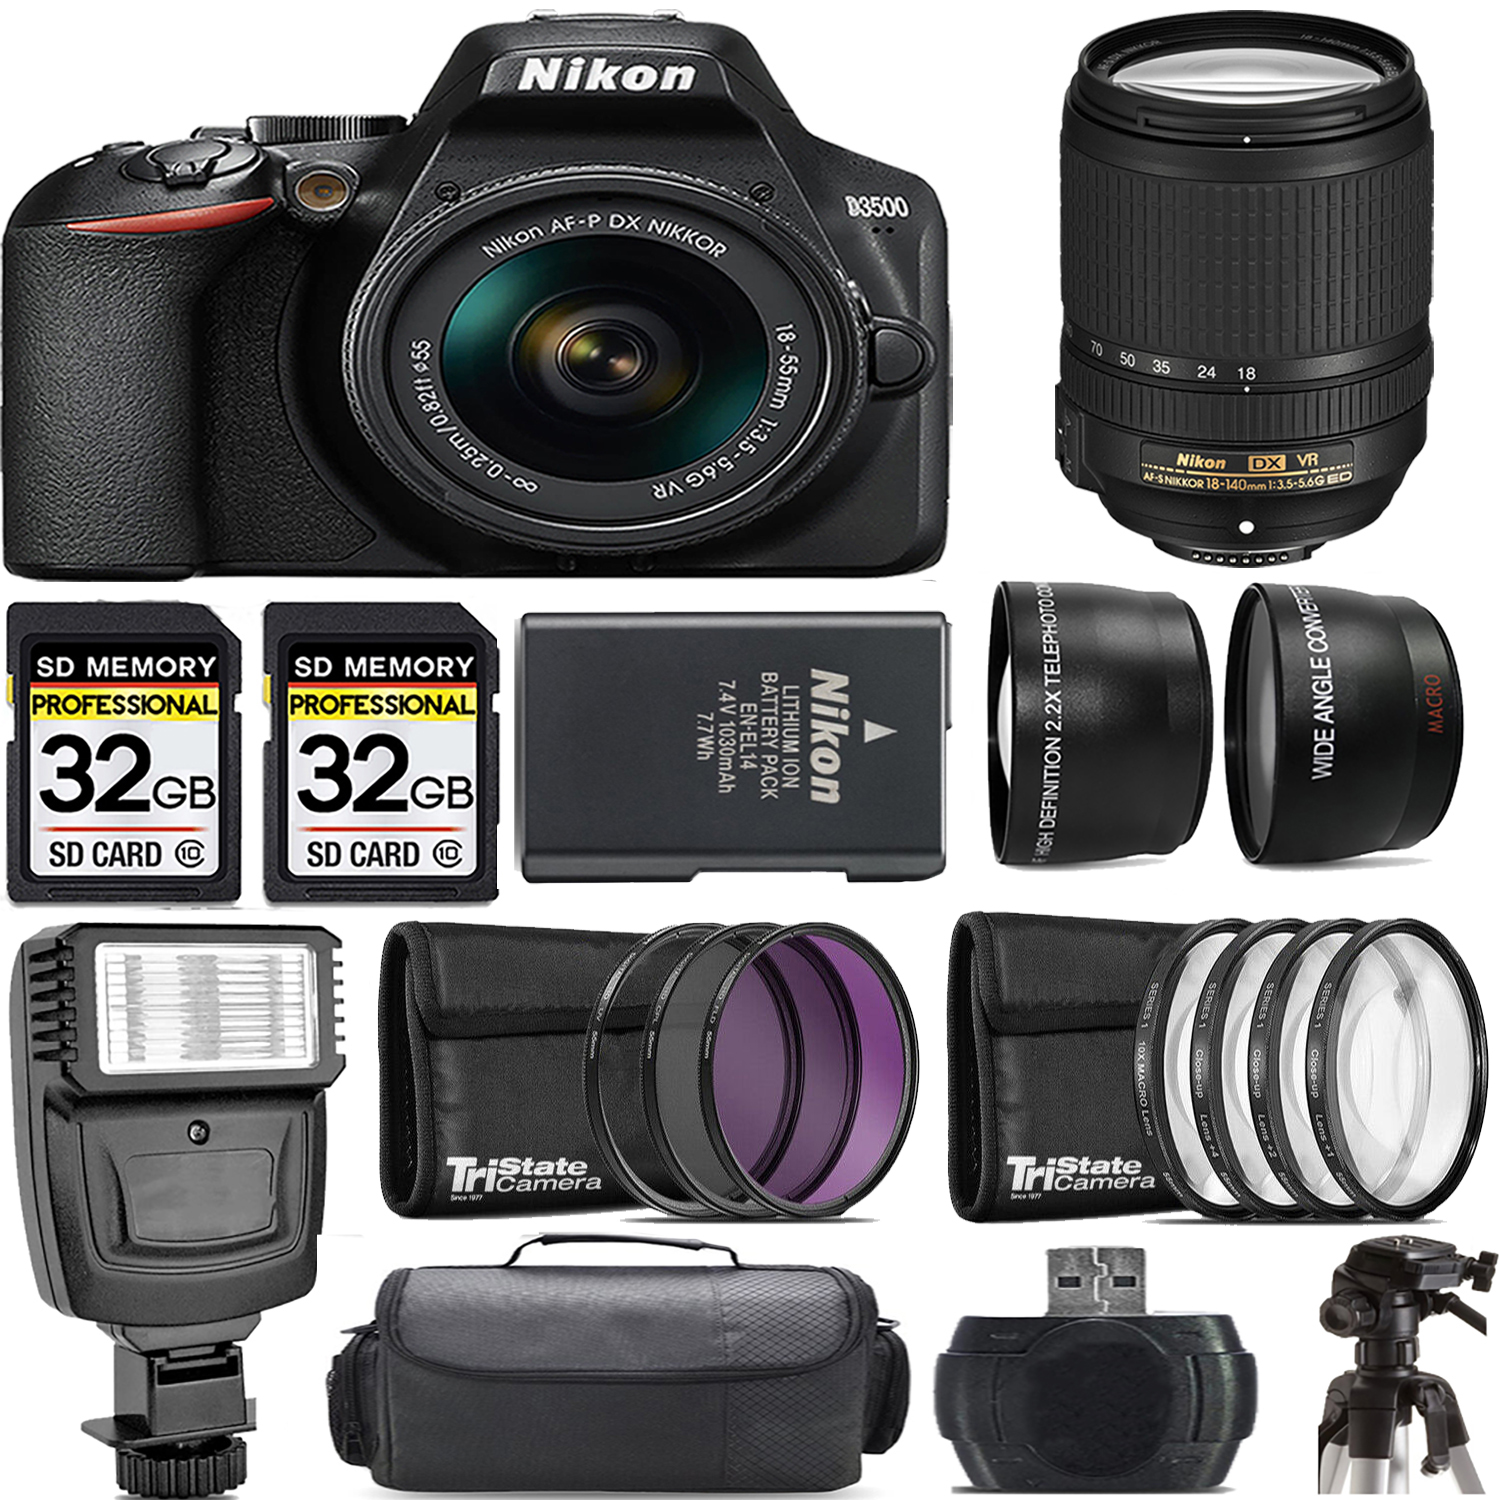 D3500 DSLR Camera with 18-55mm Lens + 18-140mm f/3.5-5.6G Lens + Flash - Kit *FREE SHIPPING*